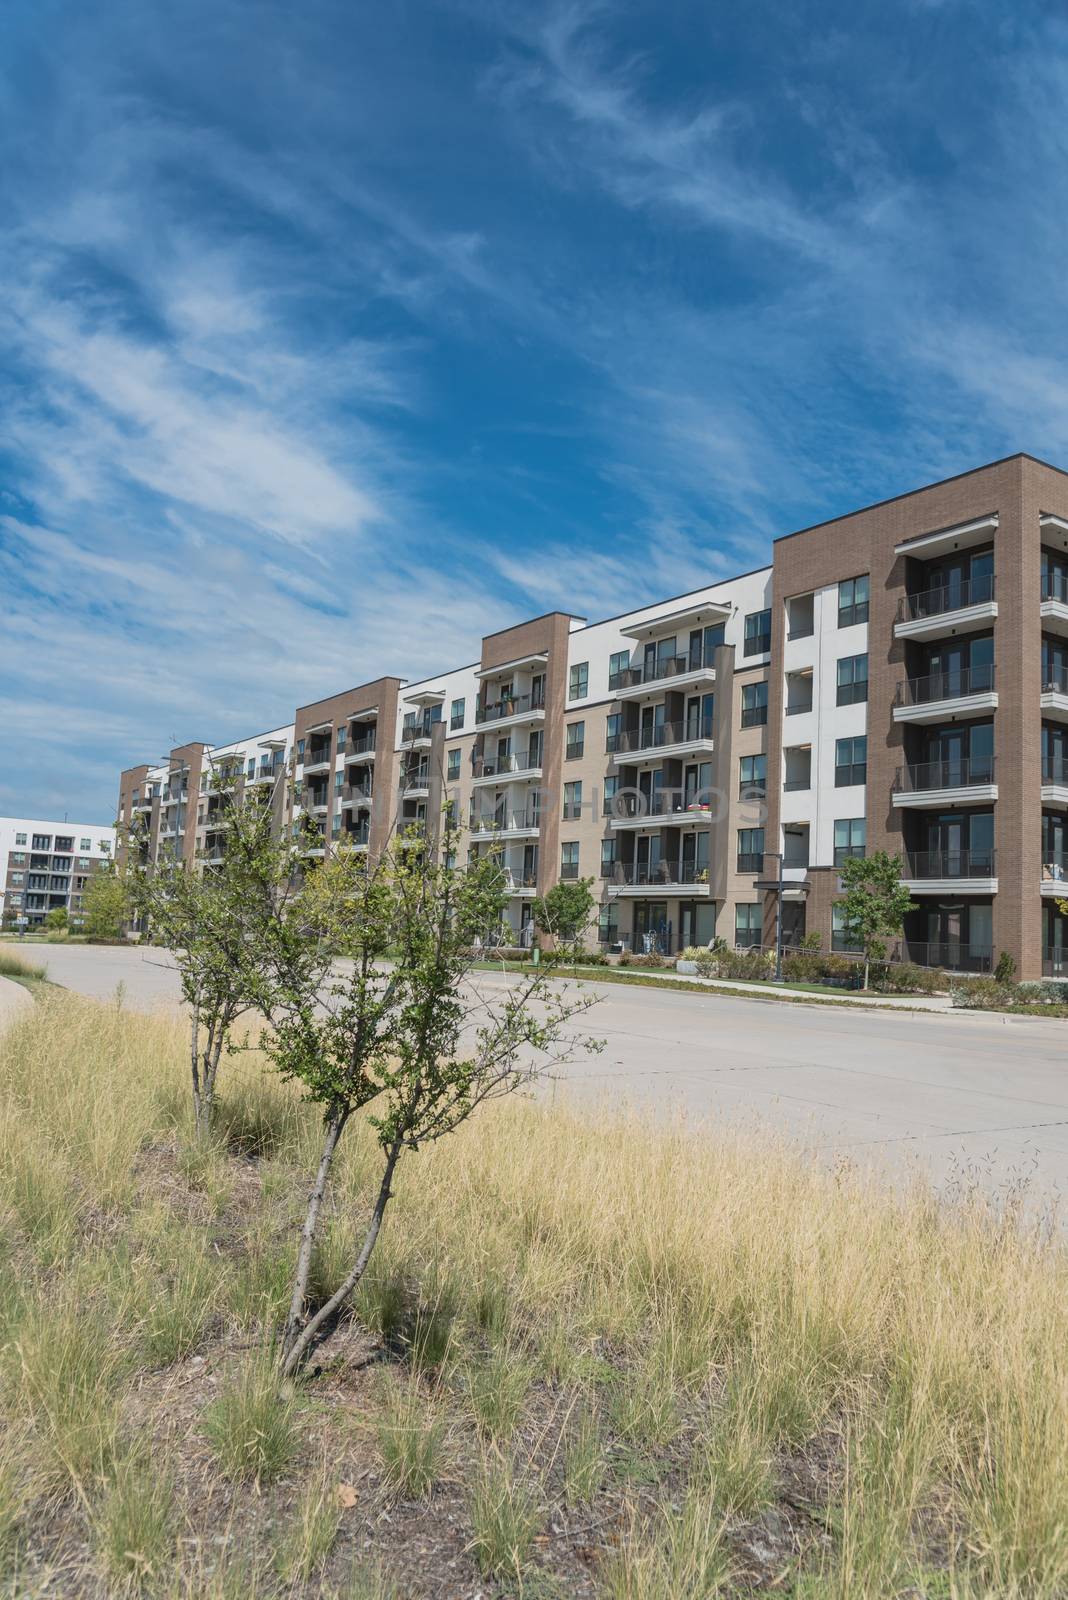 Multistorey apartment community near empty street suburbs Dallas, Texas by trongnguyen